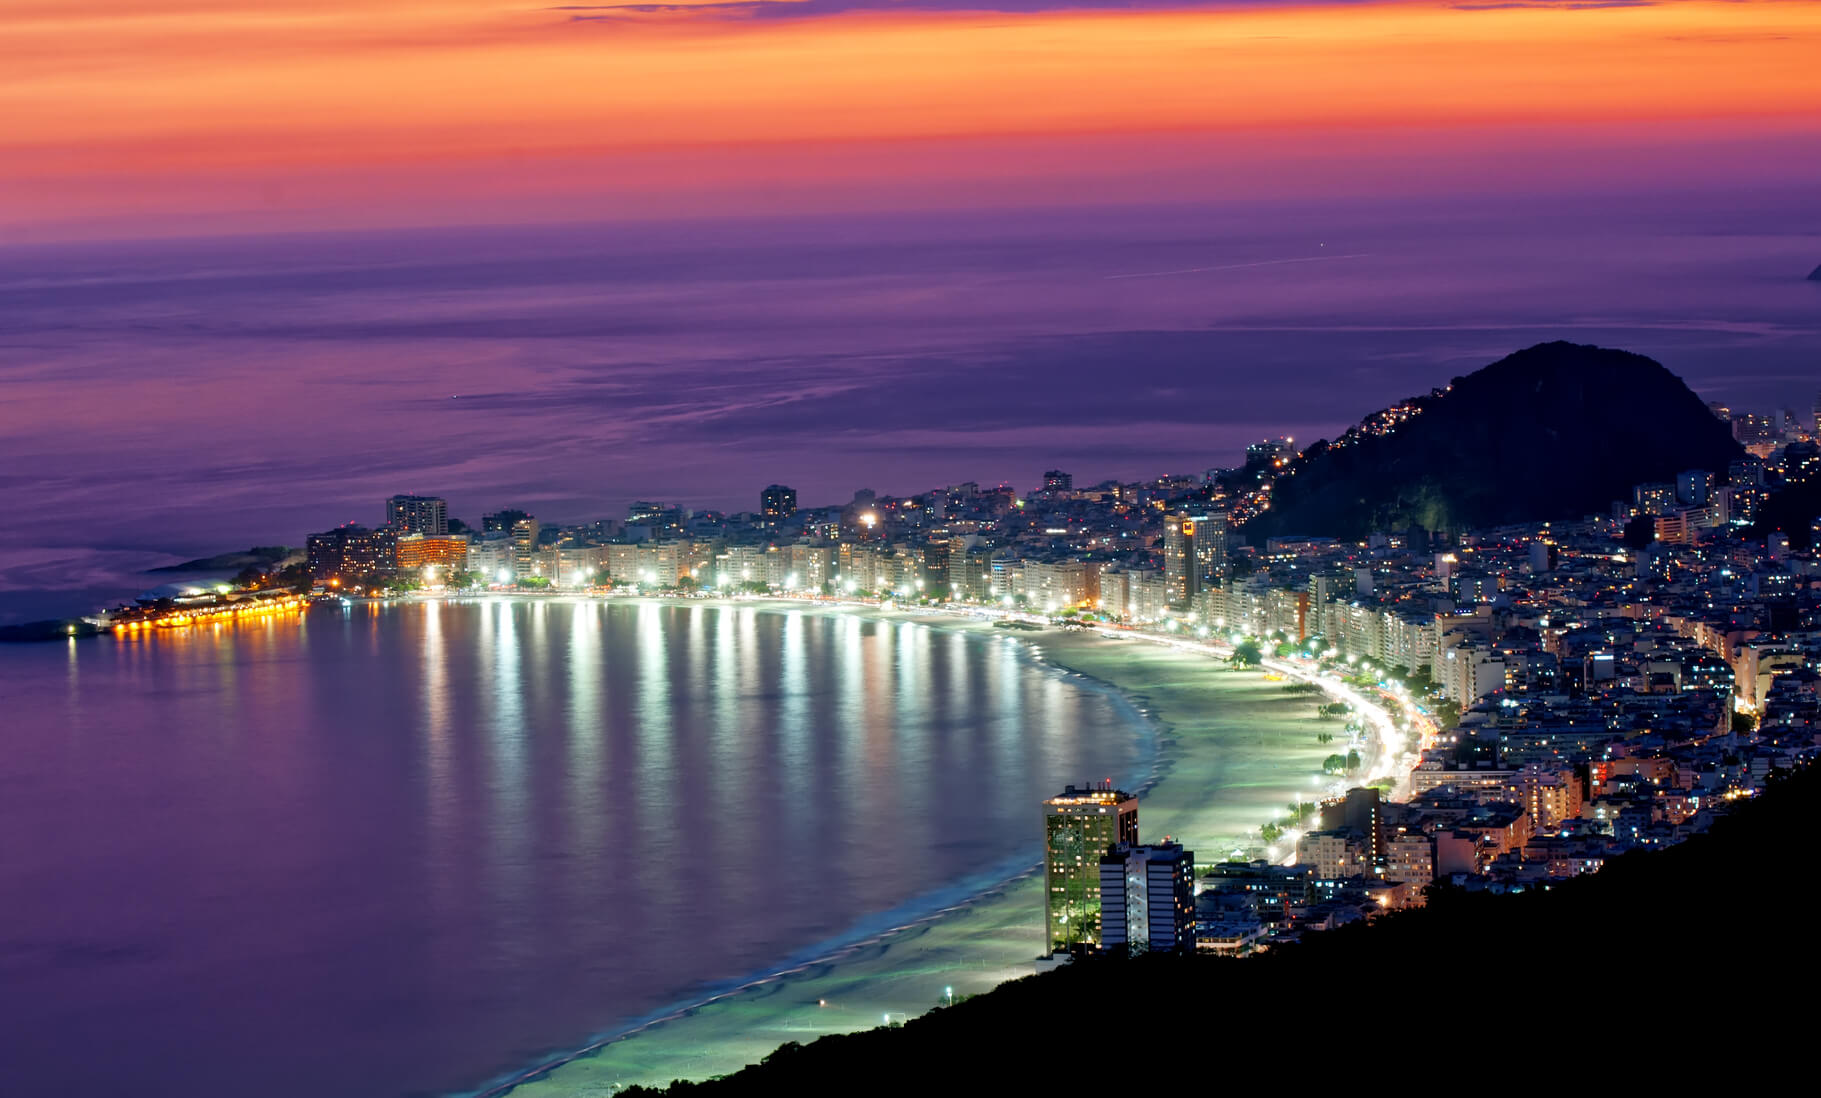 Flight deals from New York to Rio de Janeiro, Brazil | Secret Flying